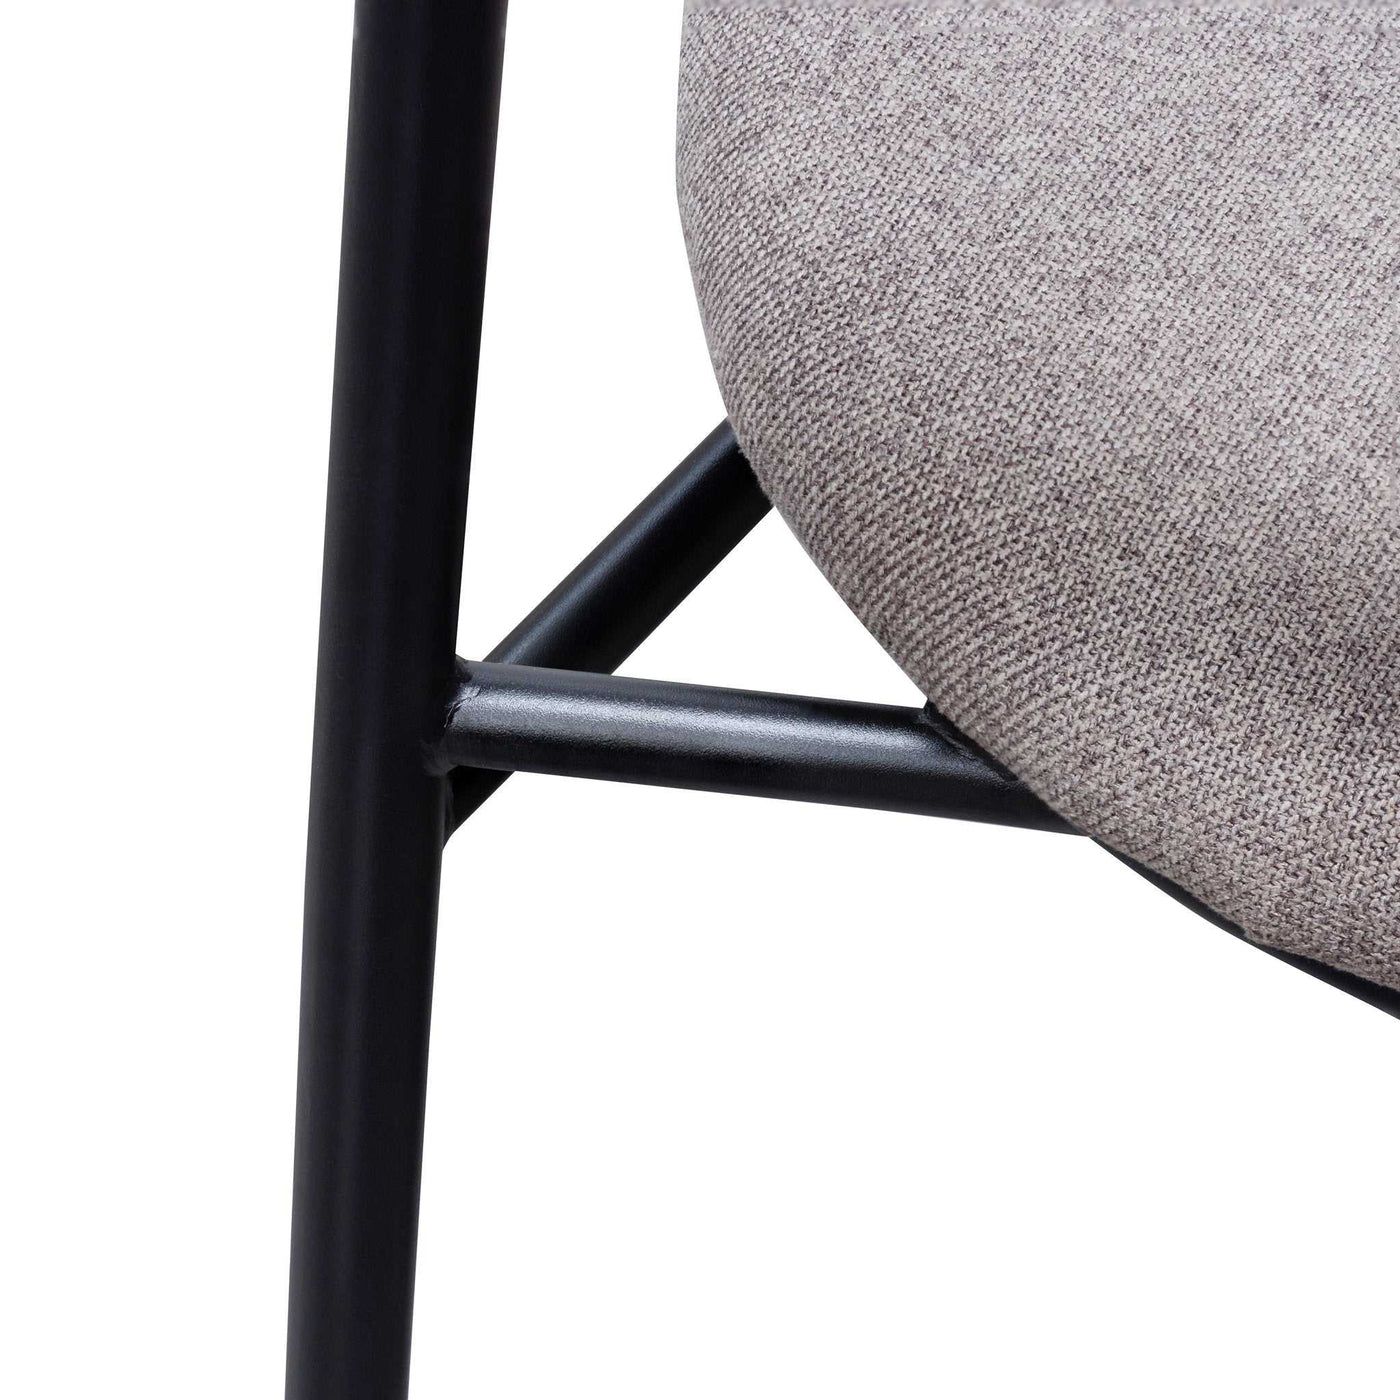 Fabric Dining Chair - Caramel Grey with Black Legs